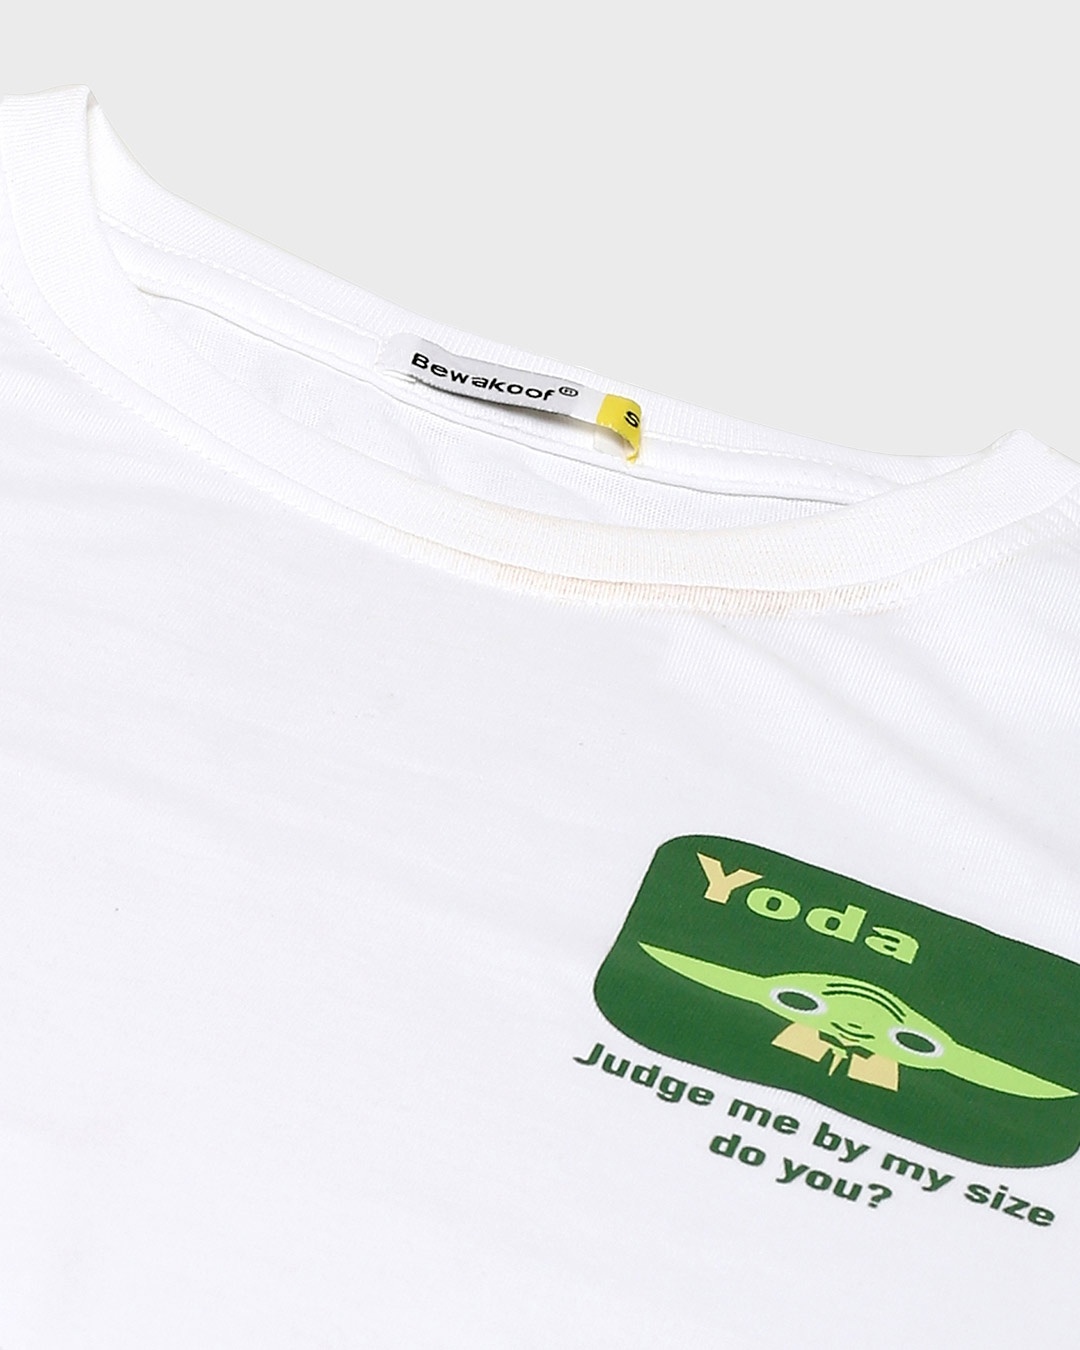 Shop Yoda- Judge me by my side Half Sleeve Printed T-Shirt